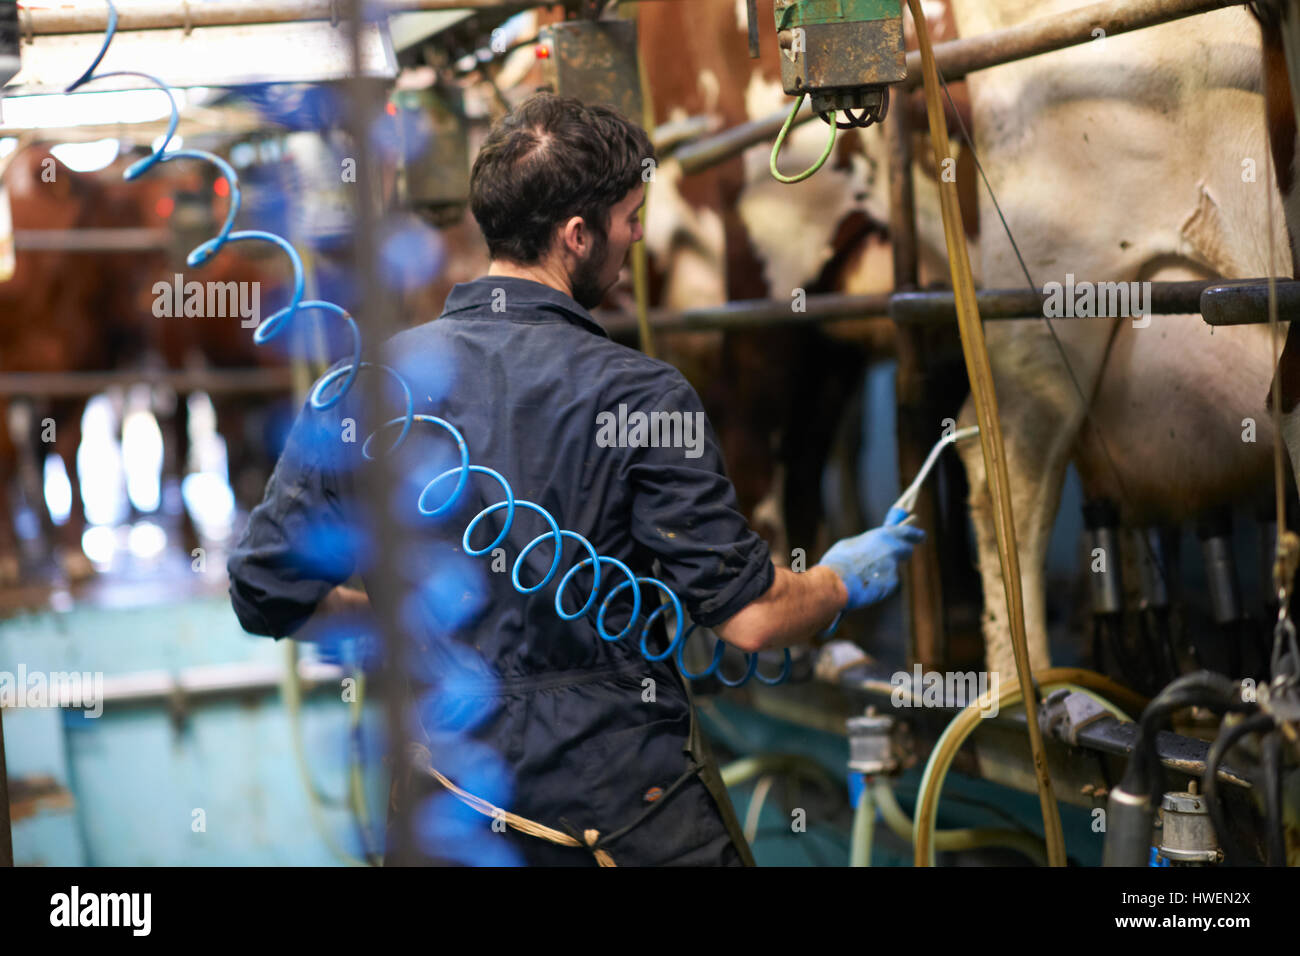 Farmer milking cows in dairy farm, using milking machines Stock Photo